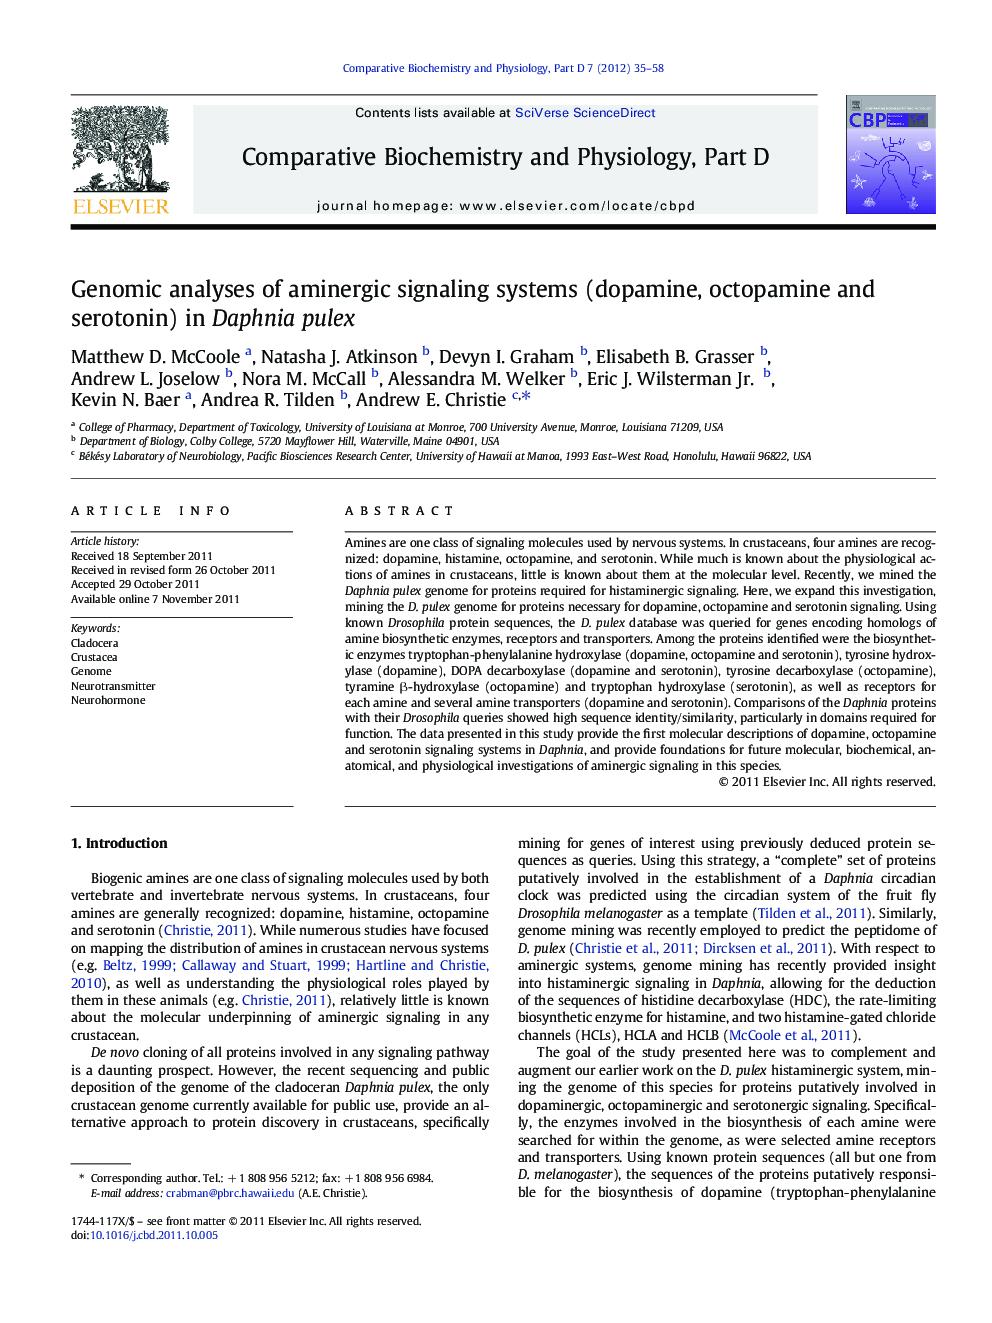 Genomic analyses of aminergic signaling systems (dopamine, octopamine and serotonin) in Daphnia pulex